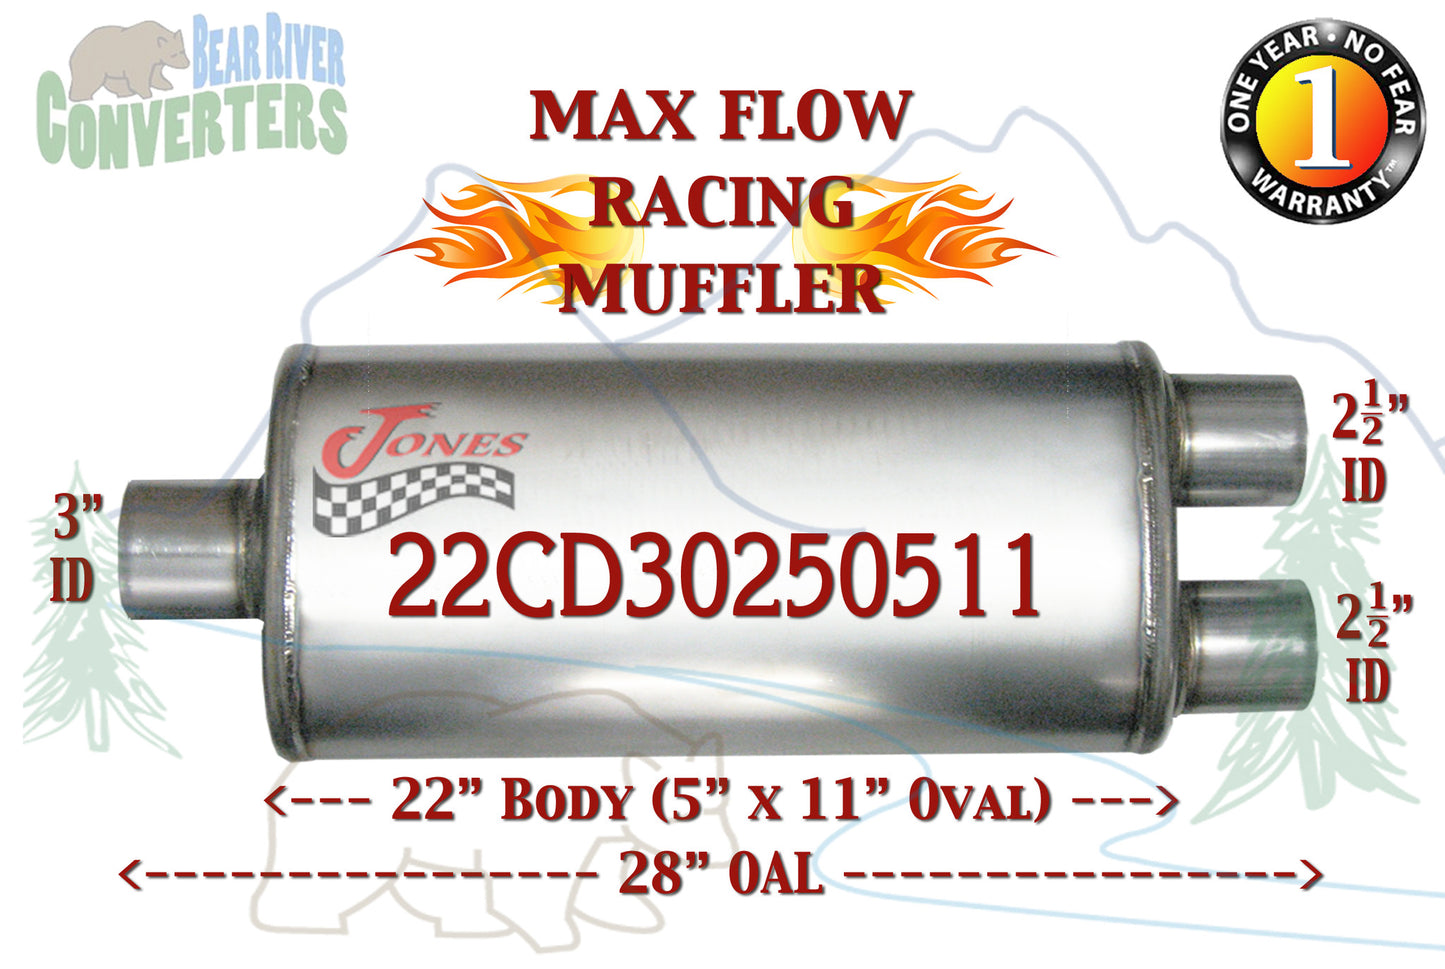 22CD30250511 Jones MF2588 Max Flow Racing Muffler 22” Oval Body 3” Center / 2 1/2” Dual Pipe 24” OAL - Bear River Converters